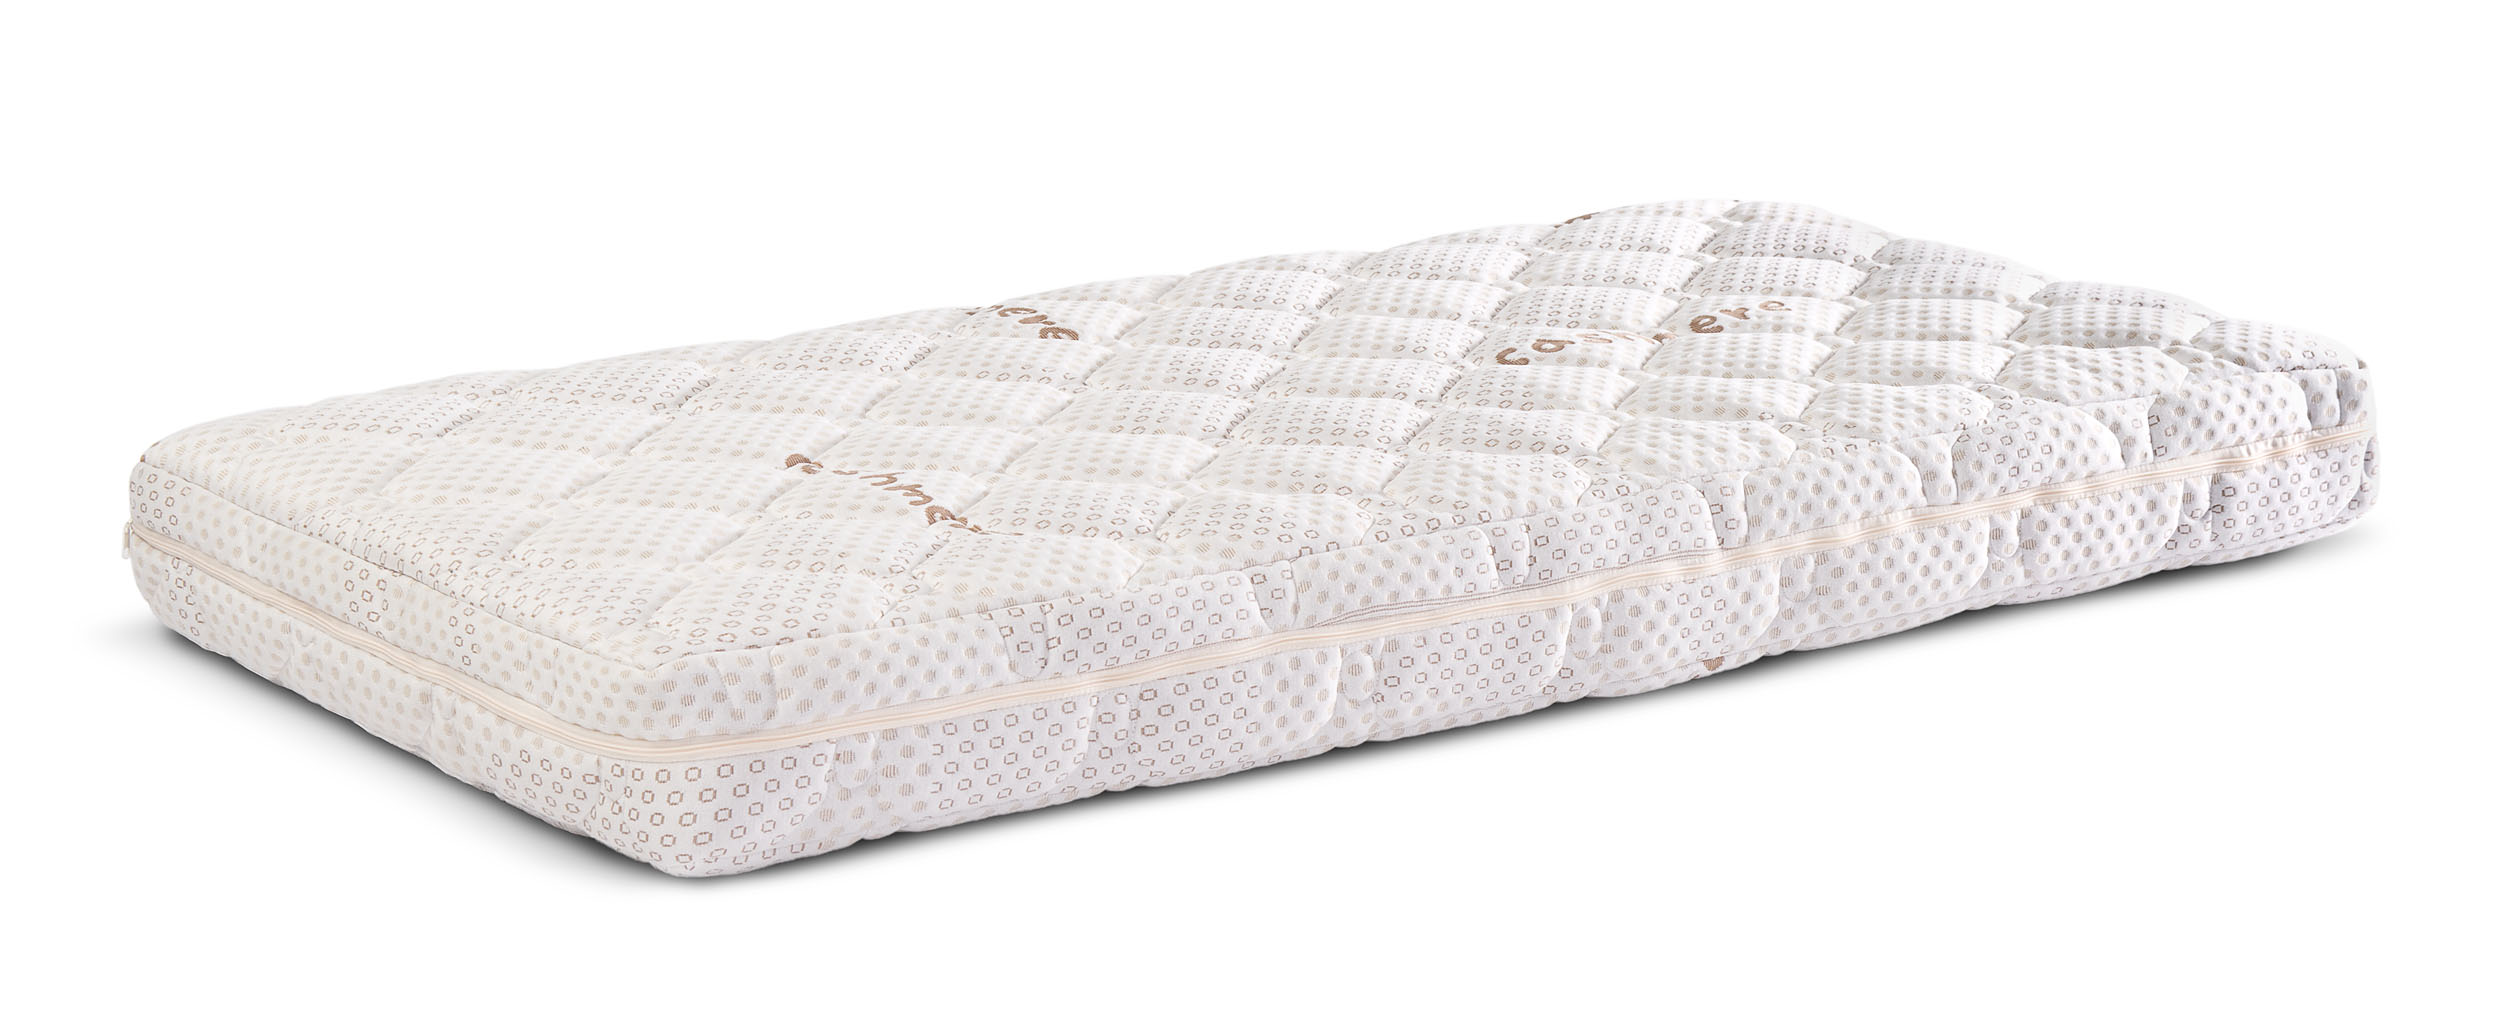 visco pro mattress review